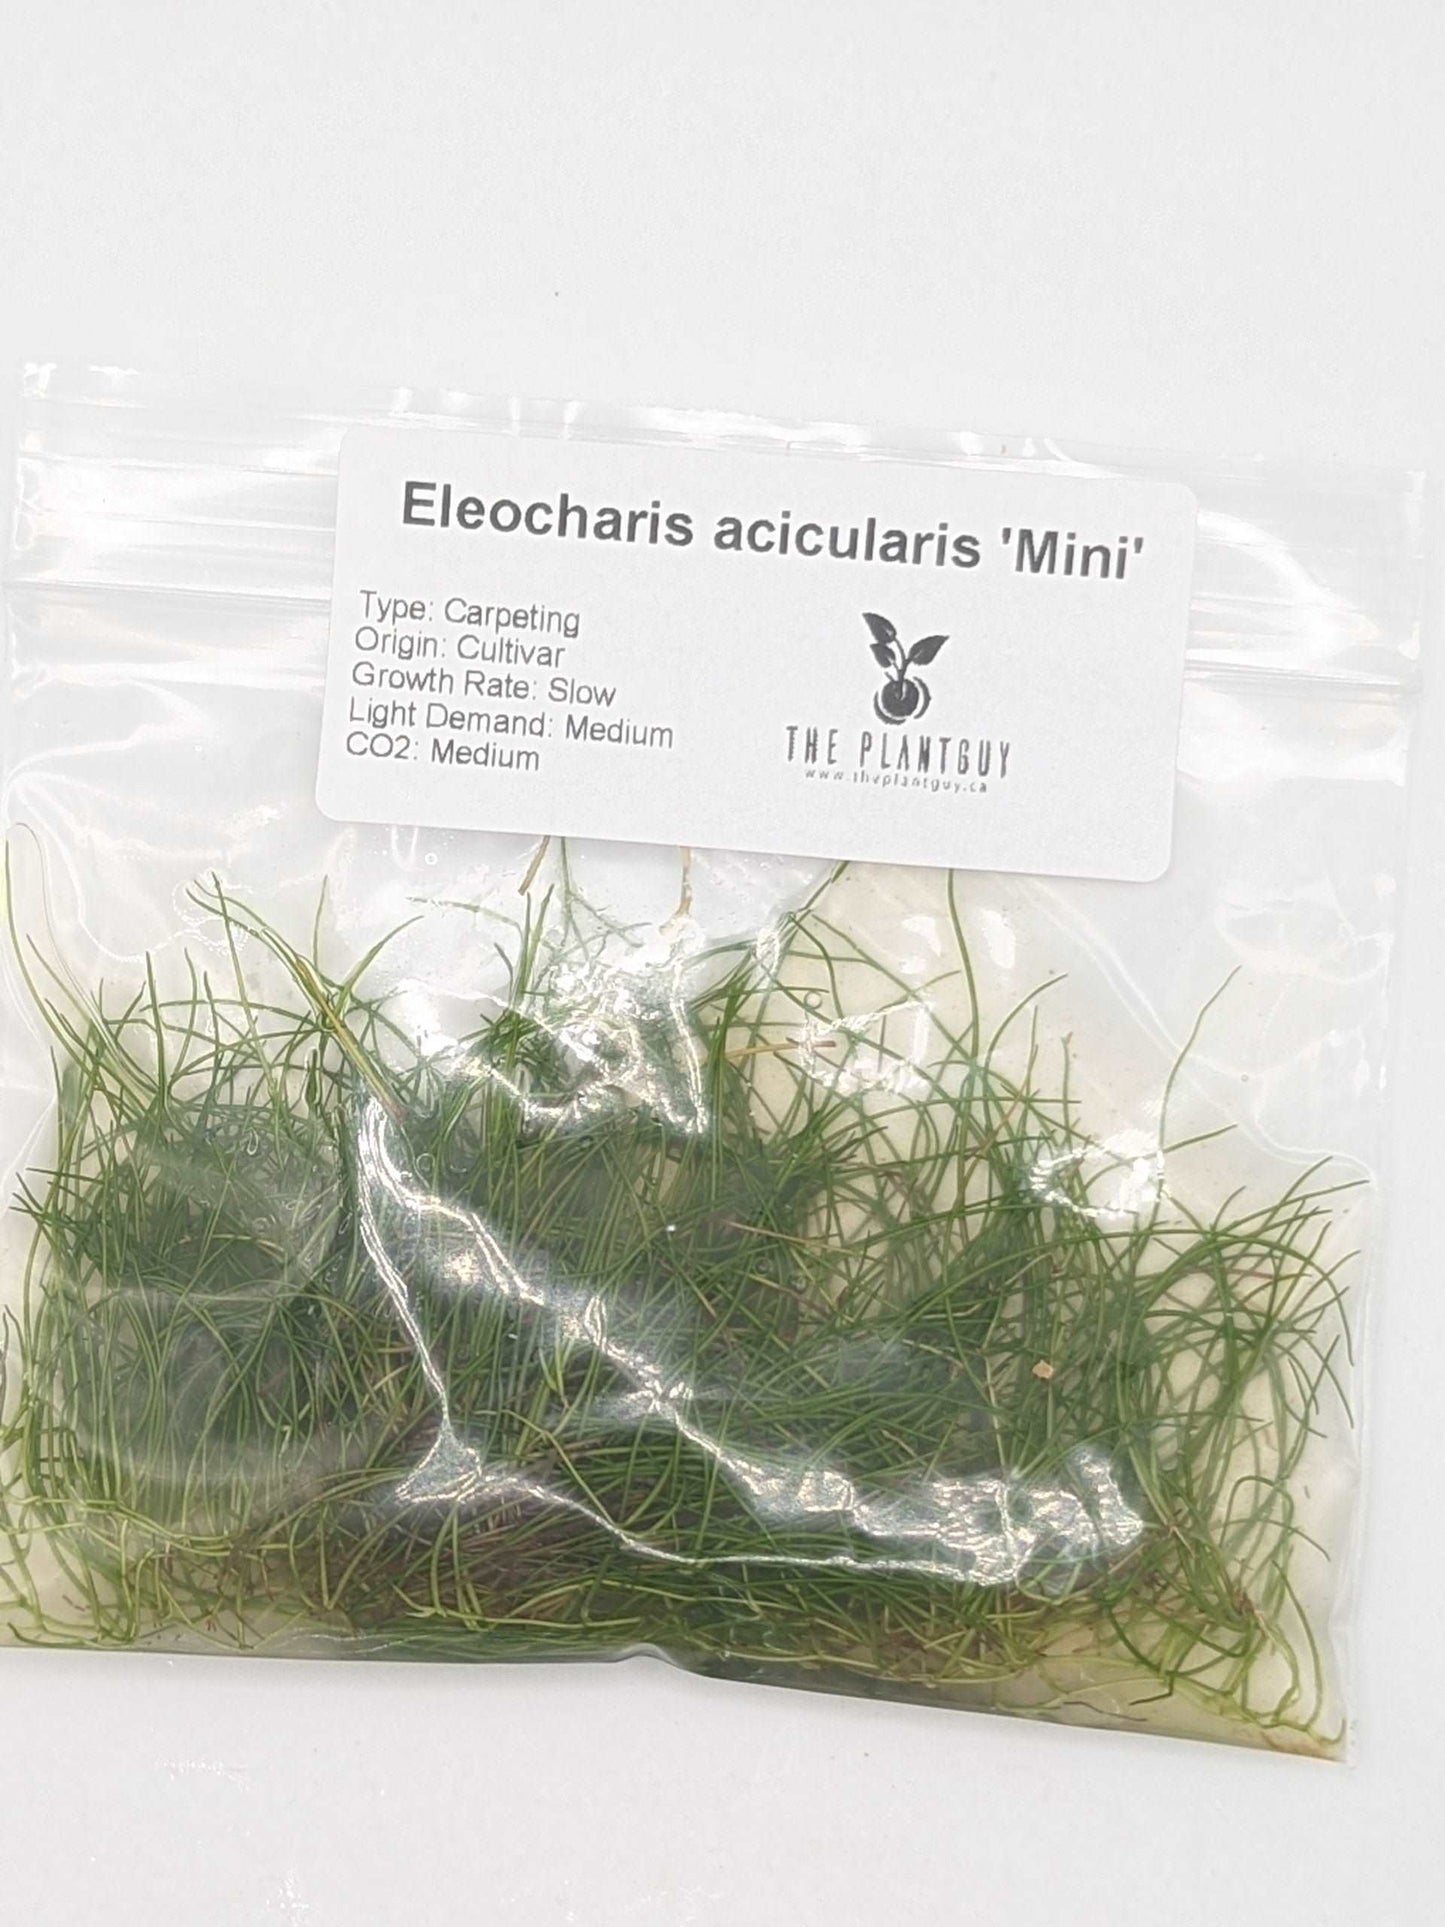 Eleocharis acicularis "mini" (PGTC Bag)